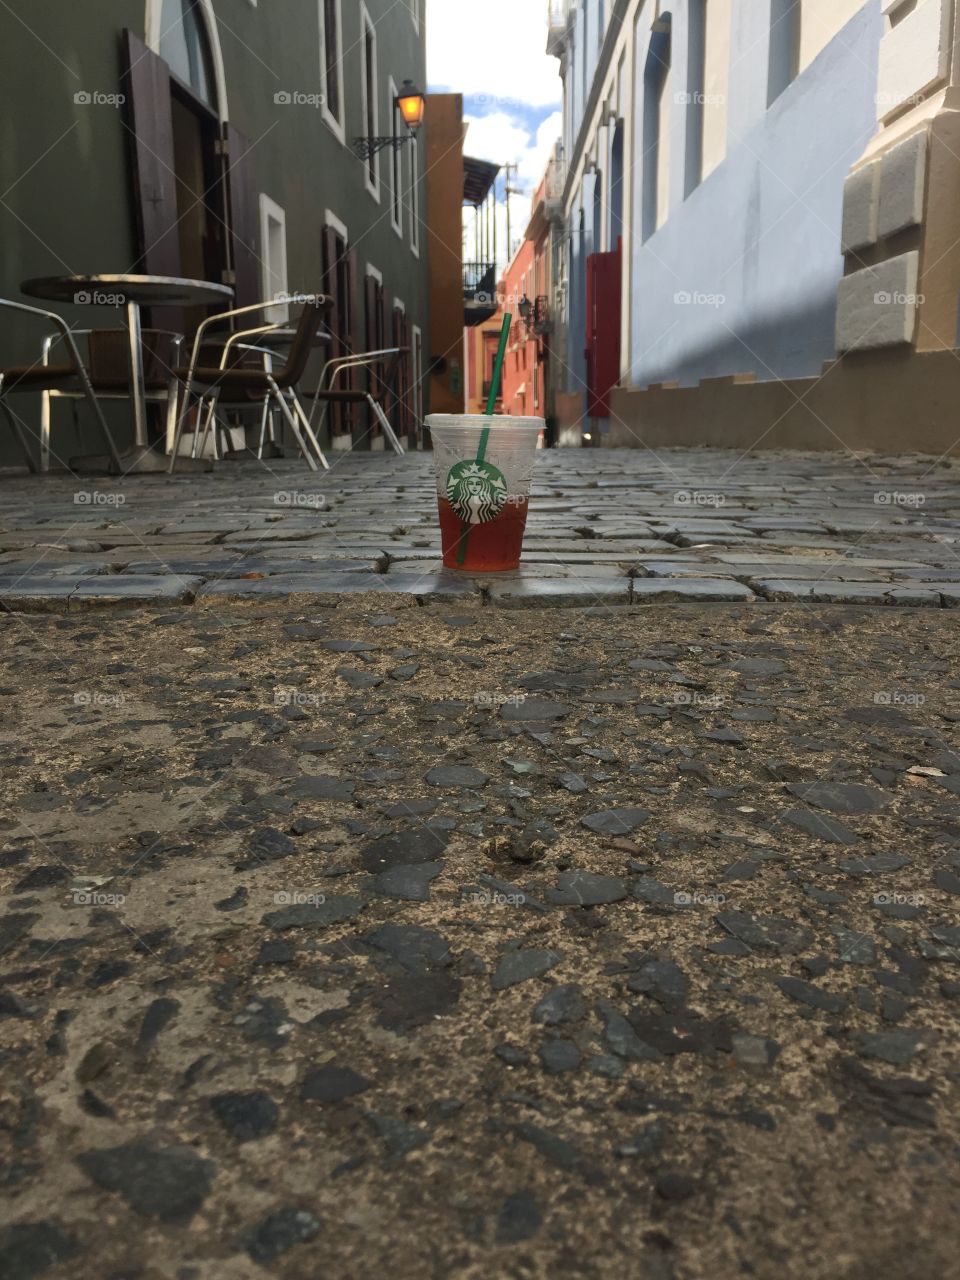 Starbucks lover. In old San Juan, Puerto Rico